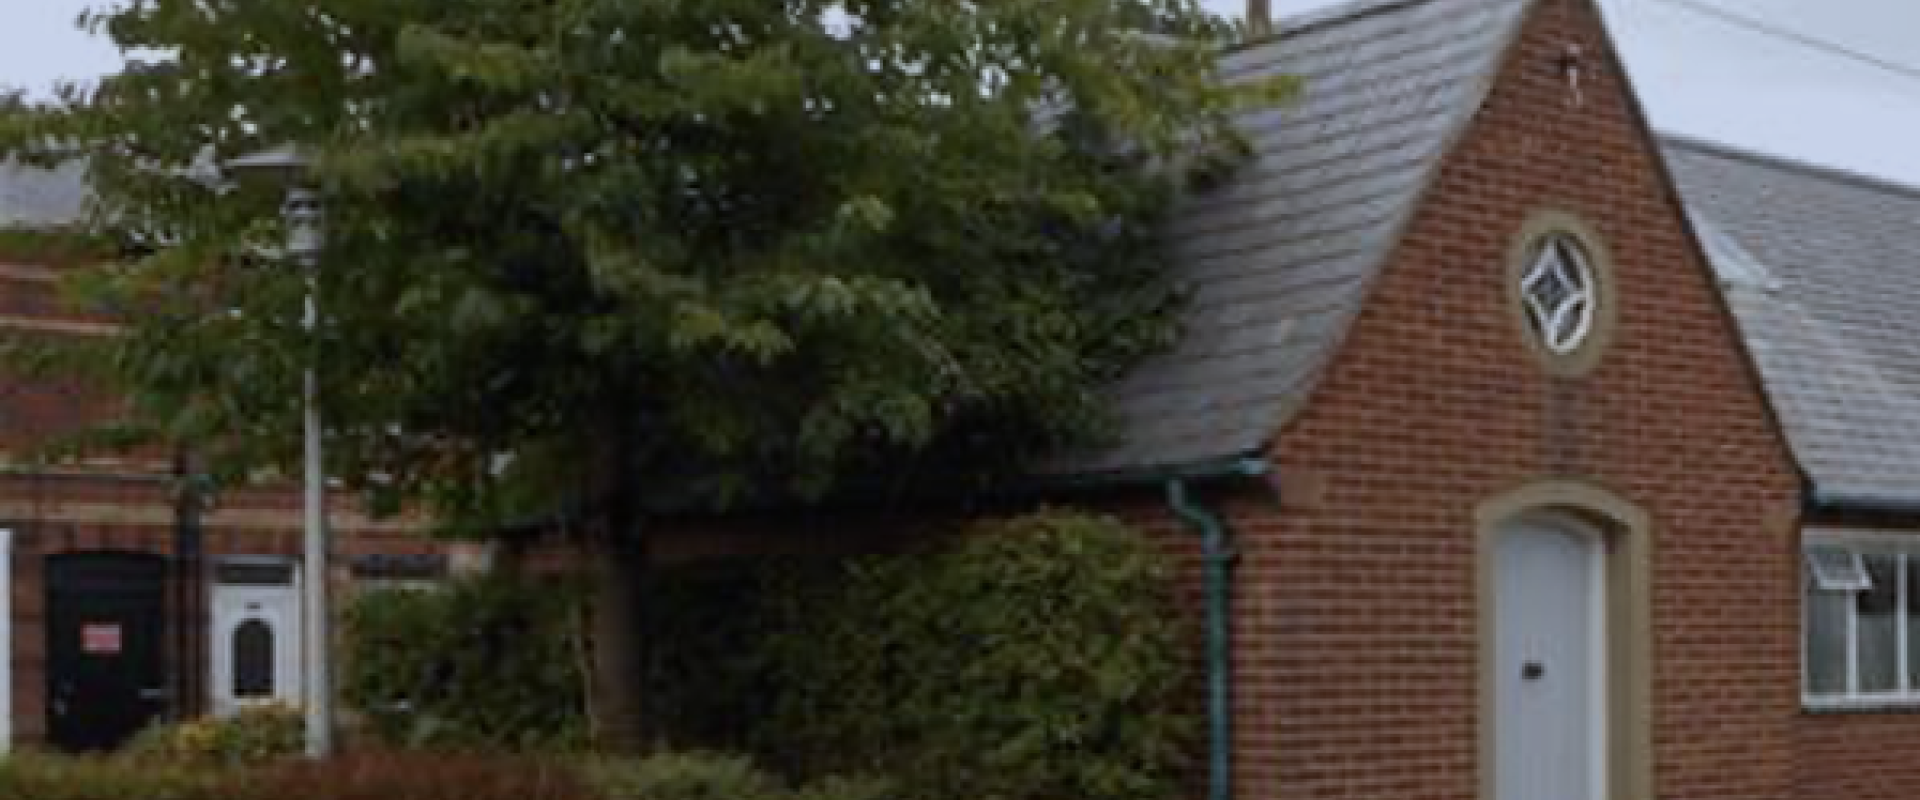 exterior image of Denbigh Infirmary Chapel